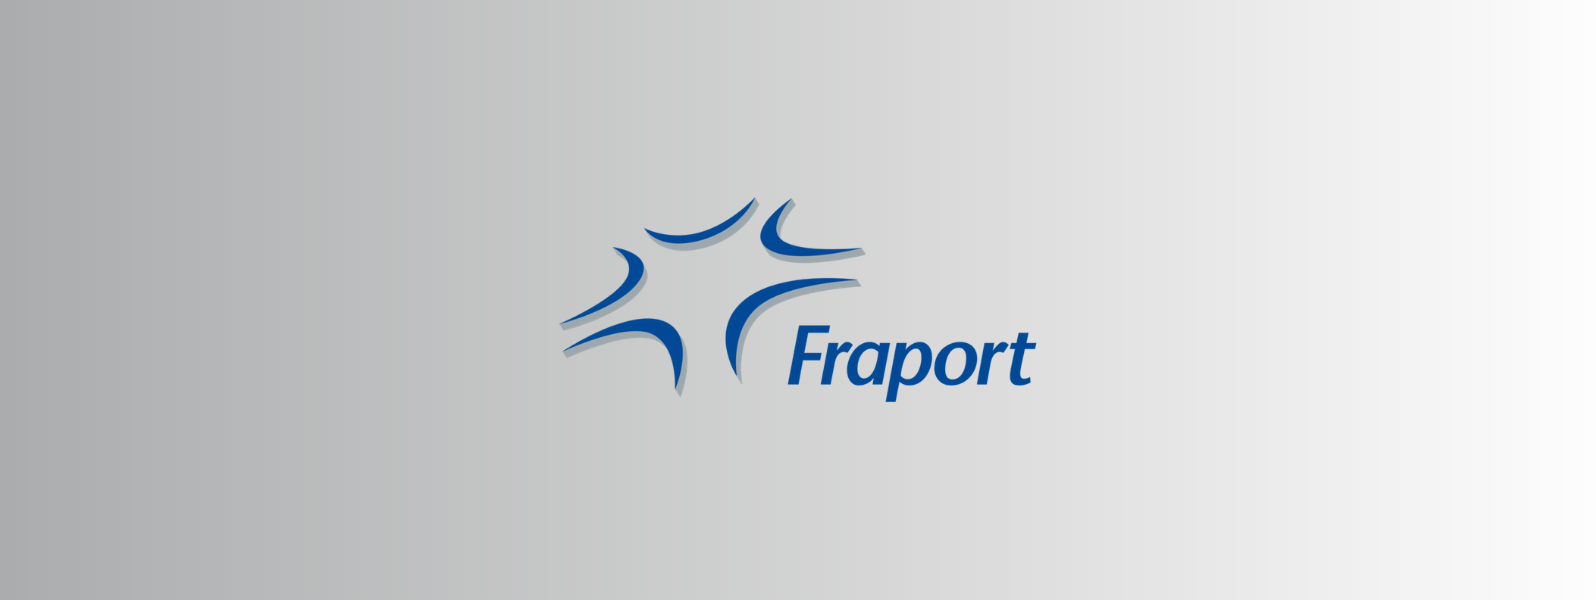 Fraport – Improving efficiencies and enhancing customer experience header image